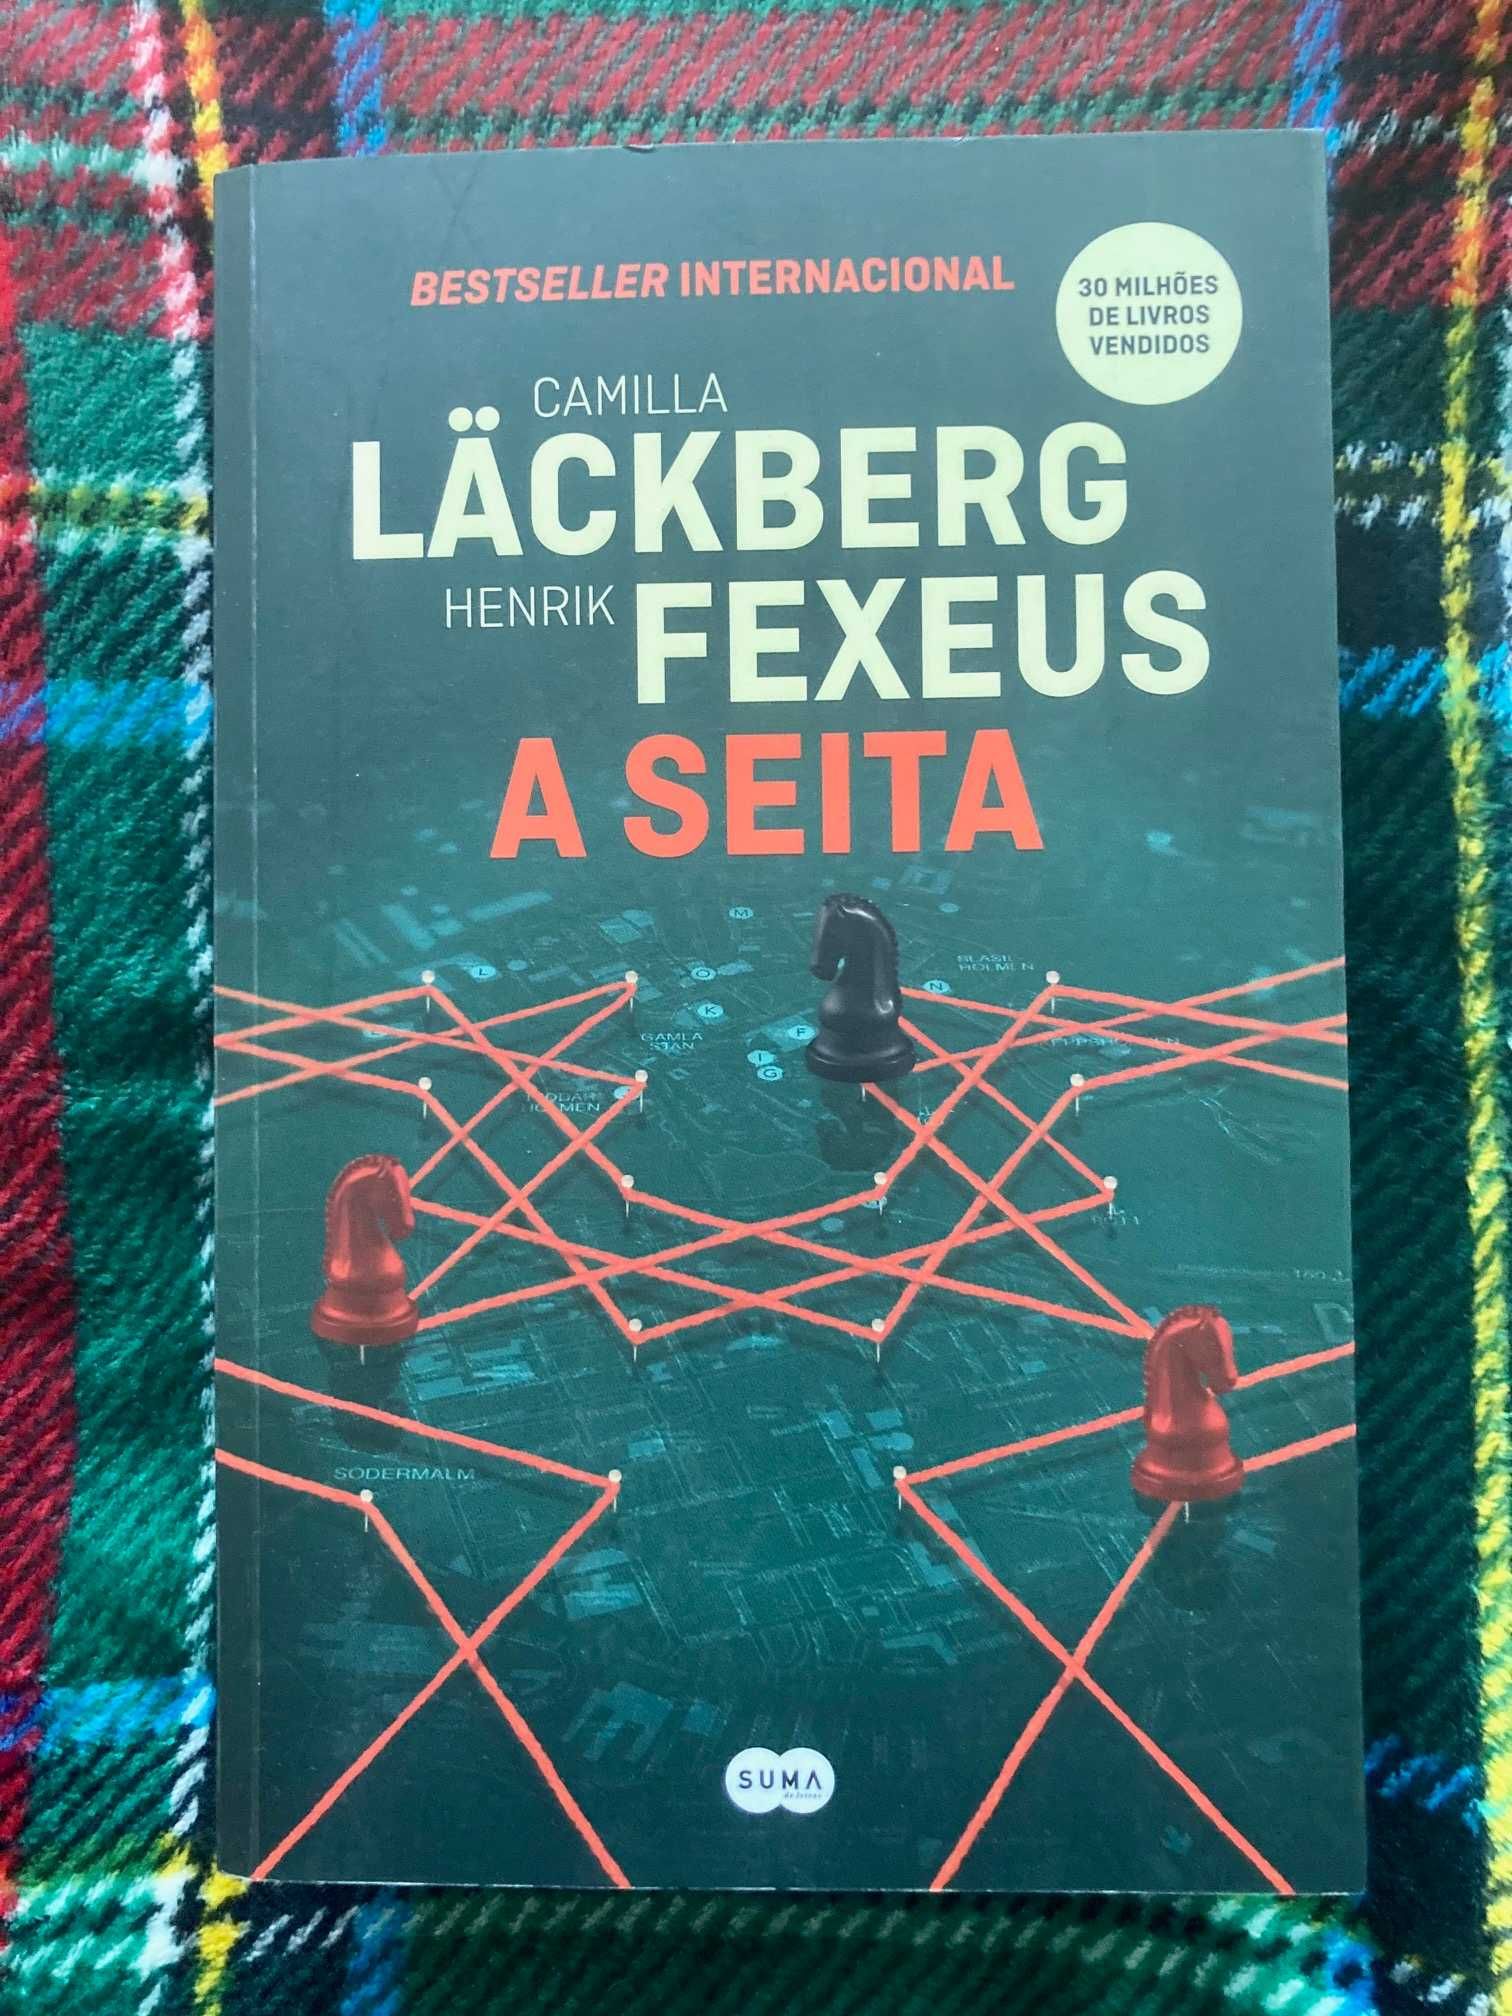 Livro "A Seita" de Camilla Läckberg e Henrik Fexeus novo e recente.